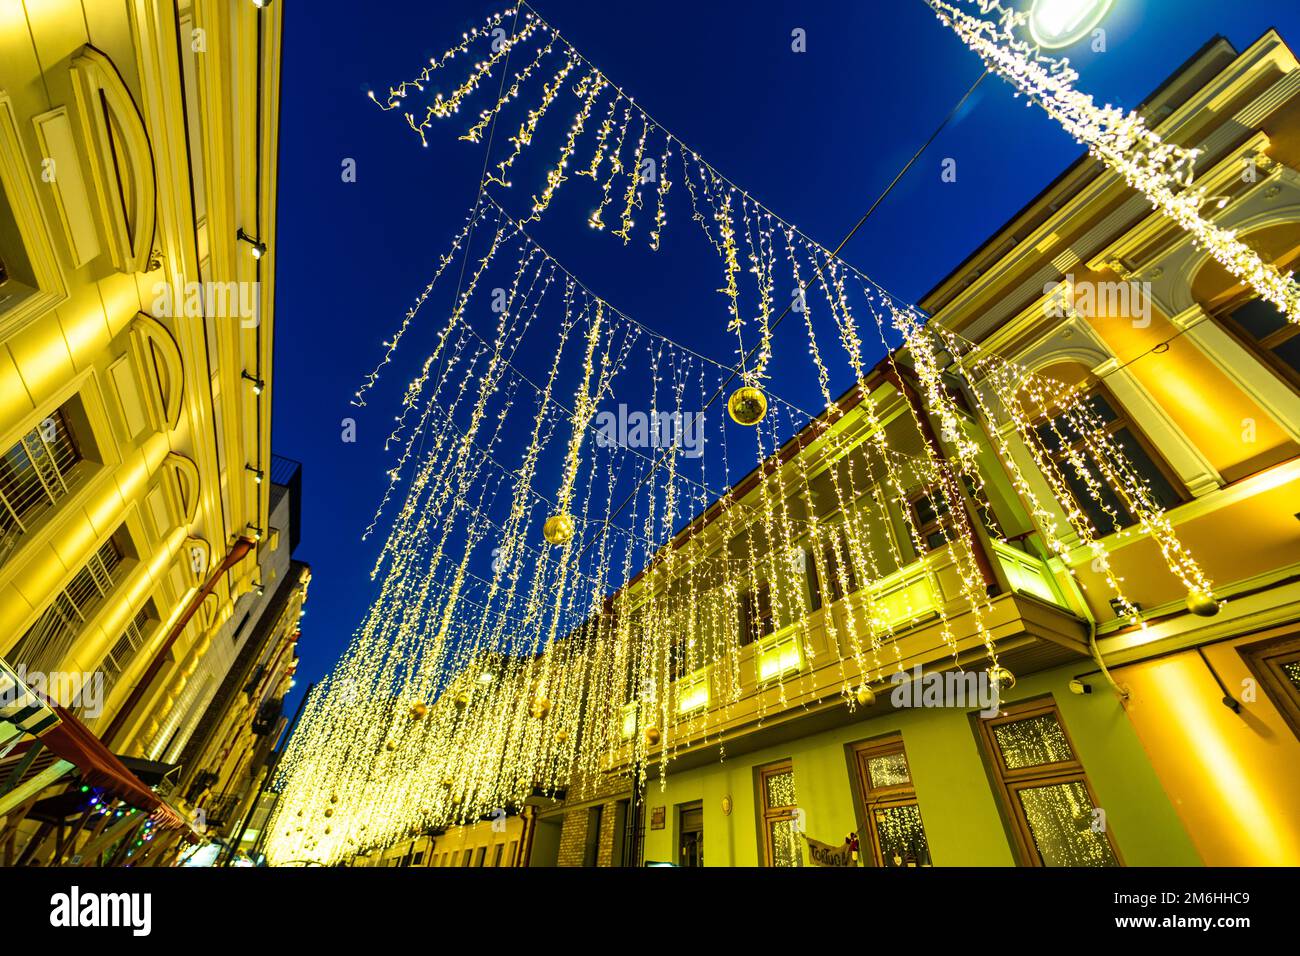 Christmas and New Year illumination in Tbilisi, Georgia Stock Photo